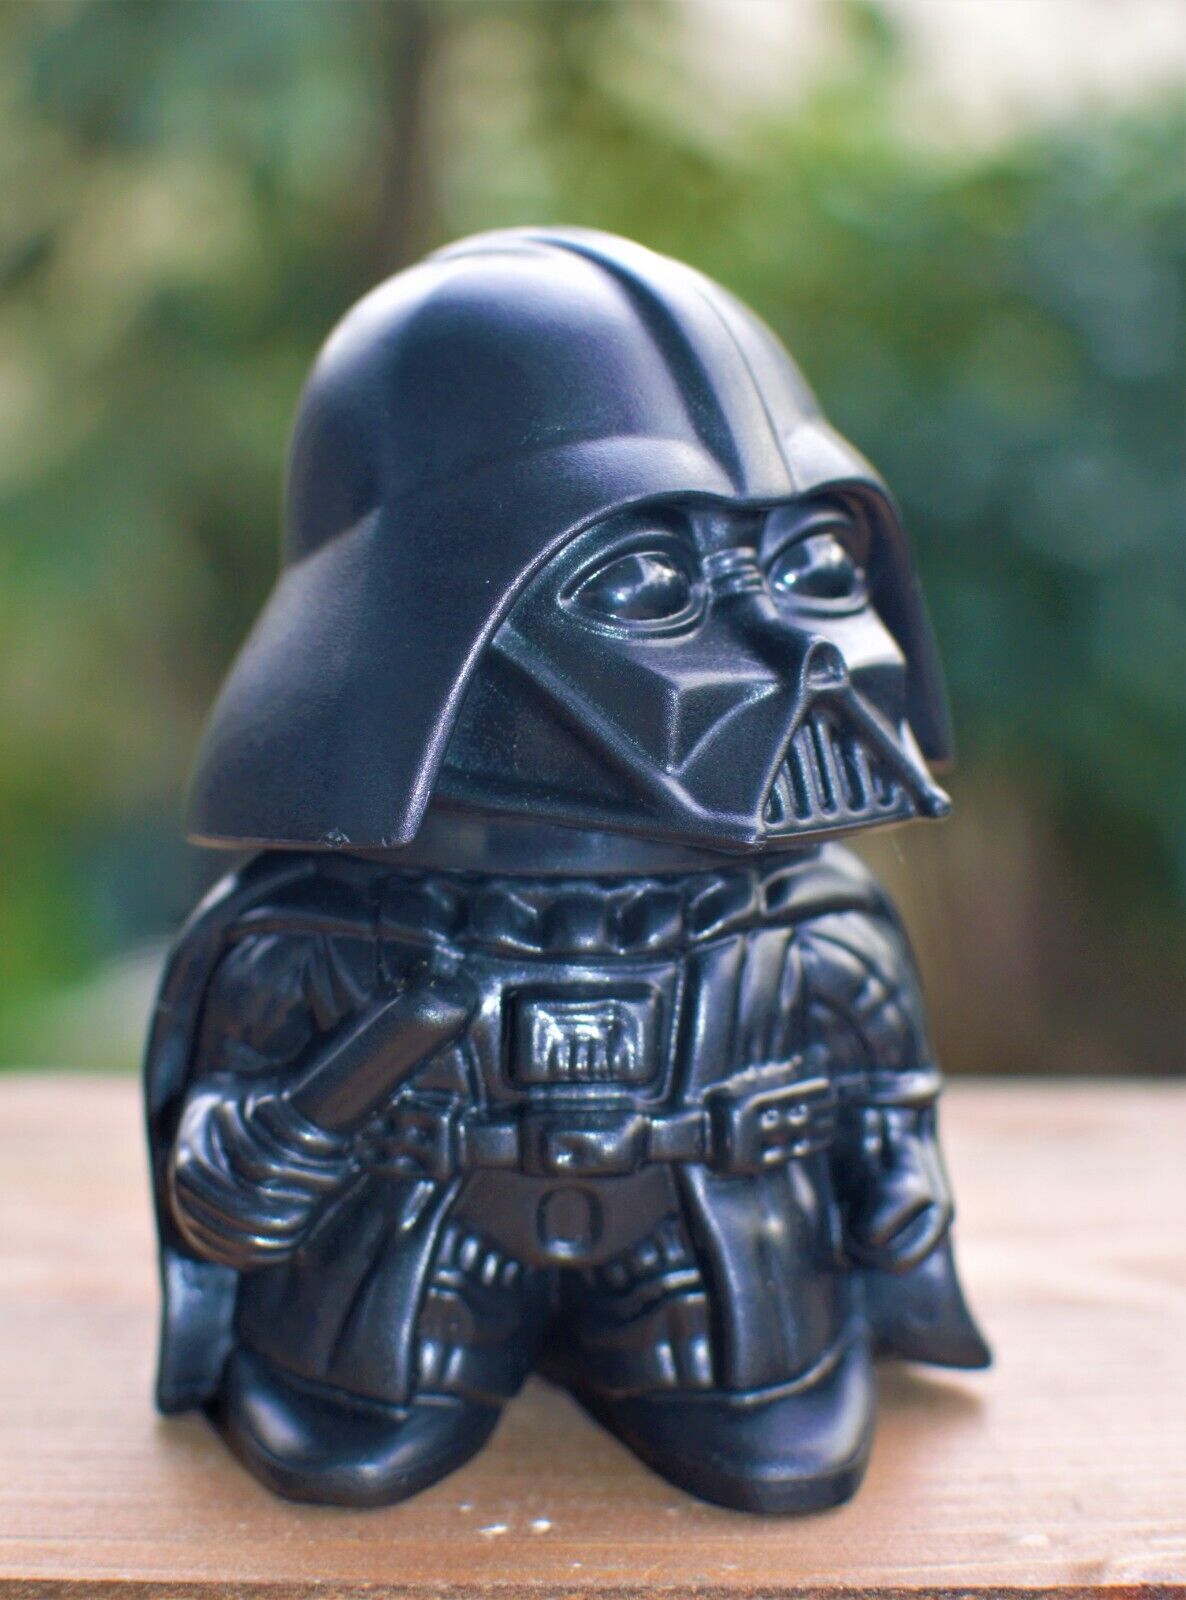 Darth Vader Star Wars Spice Herb Grinder, 3 Piece with Storage Container, Baby Y